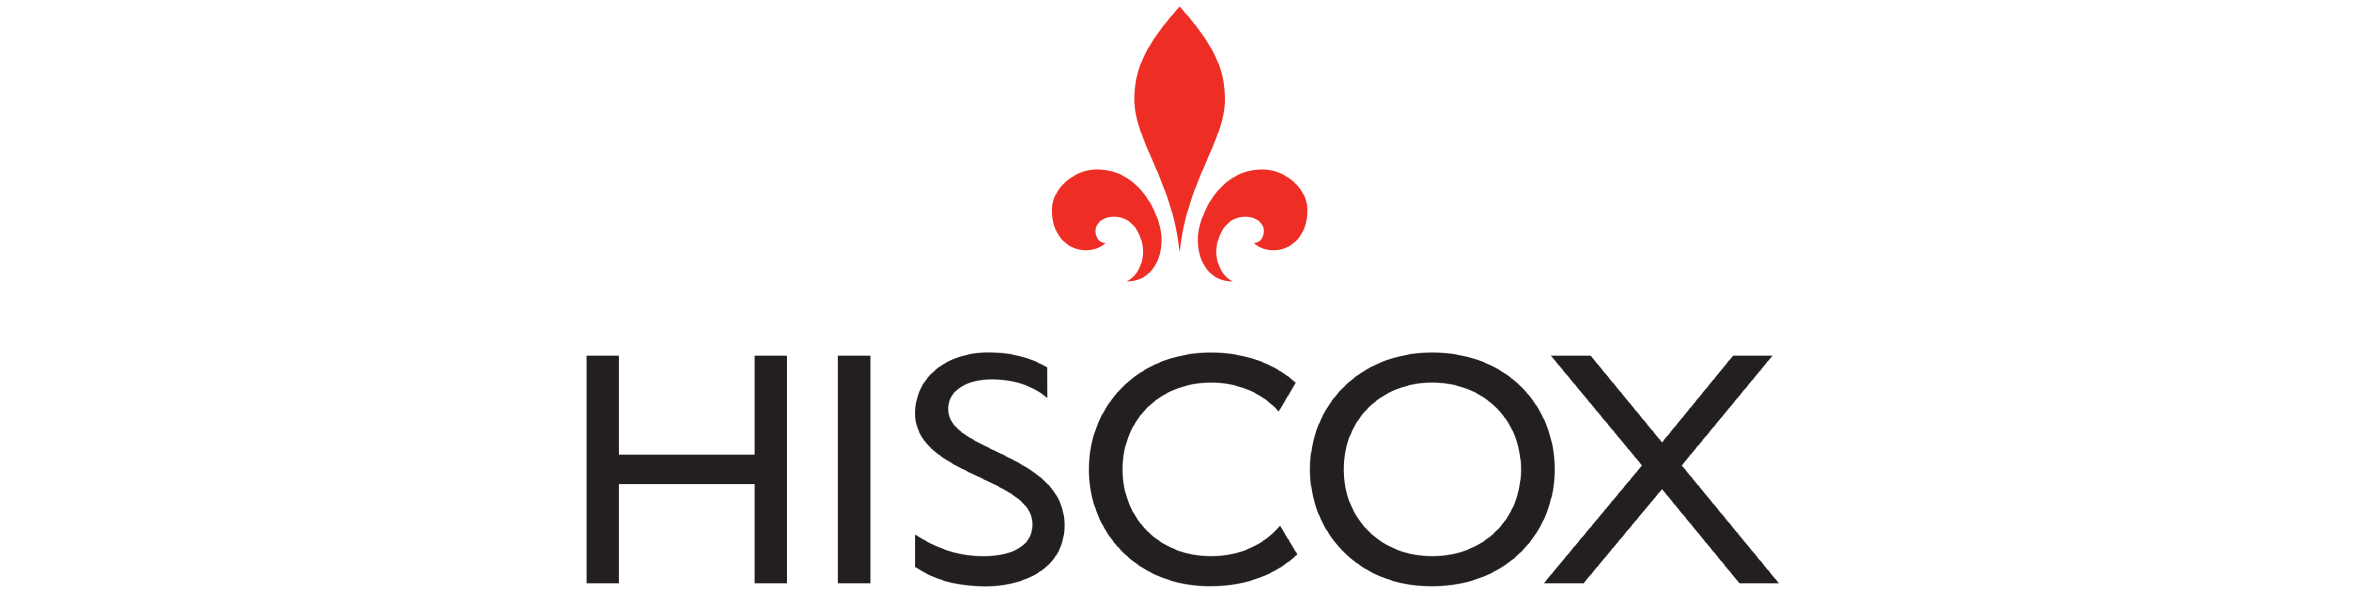 hiscox business insurance logo